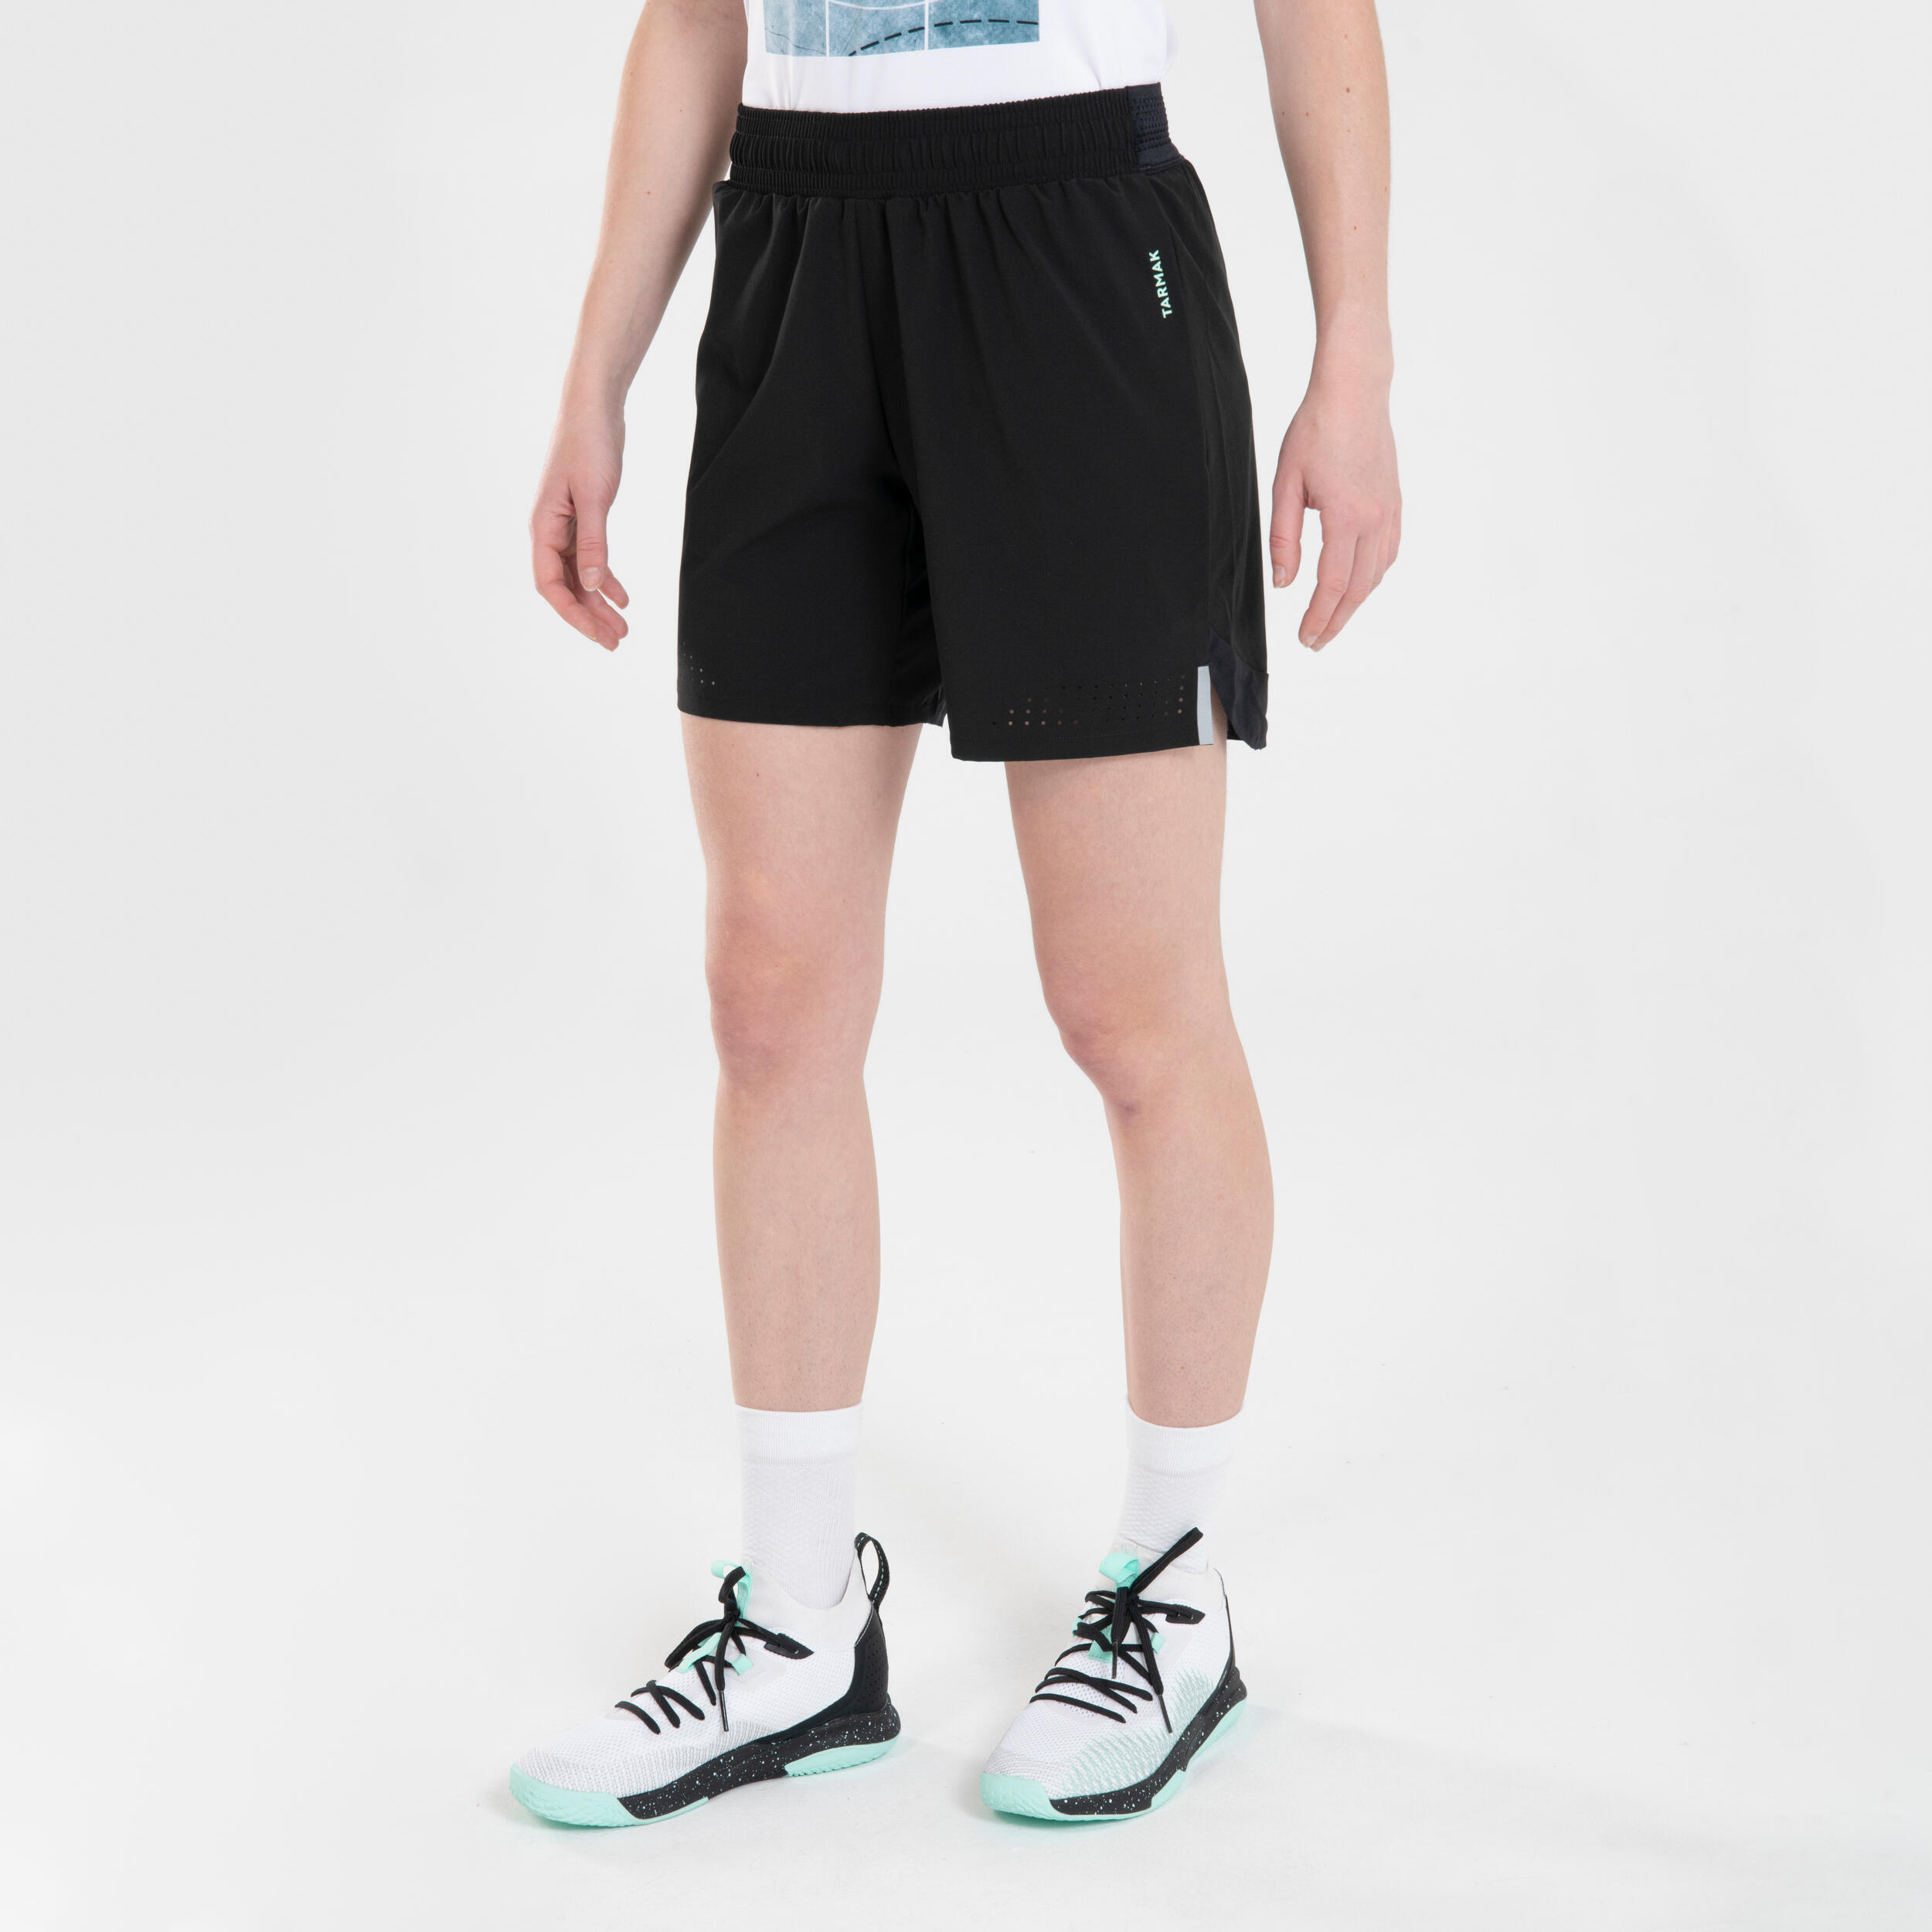 TARMAK Women's Basketball Shorts SH500 - Black